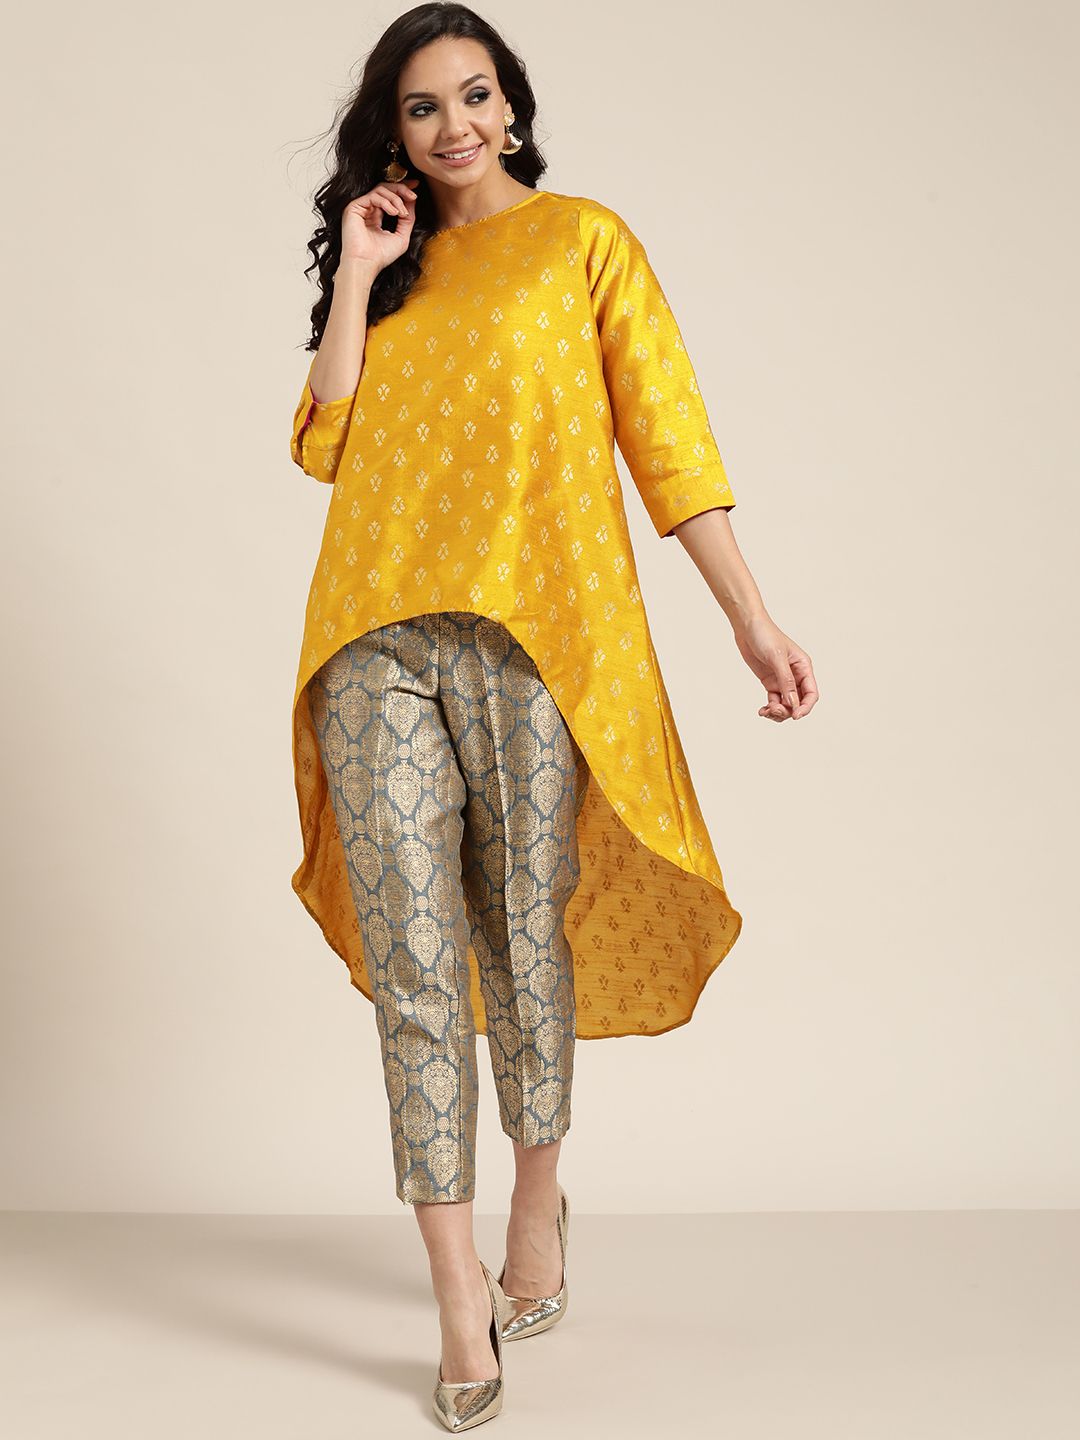 Shae by SASSAFRAS Mustard Yellow & Golden Printed Asymmetric Tunic Price in India